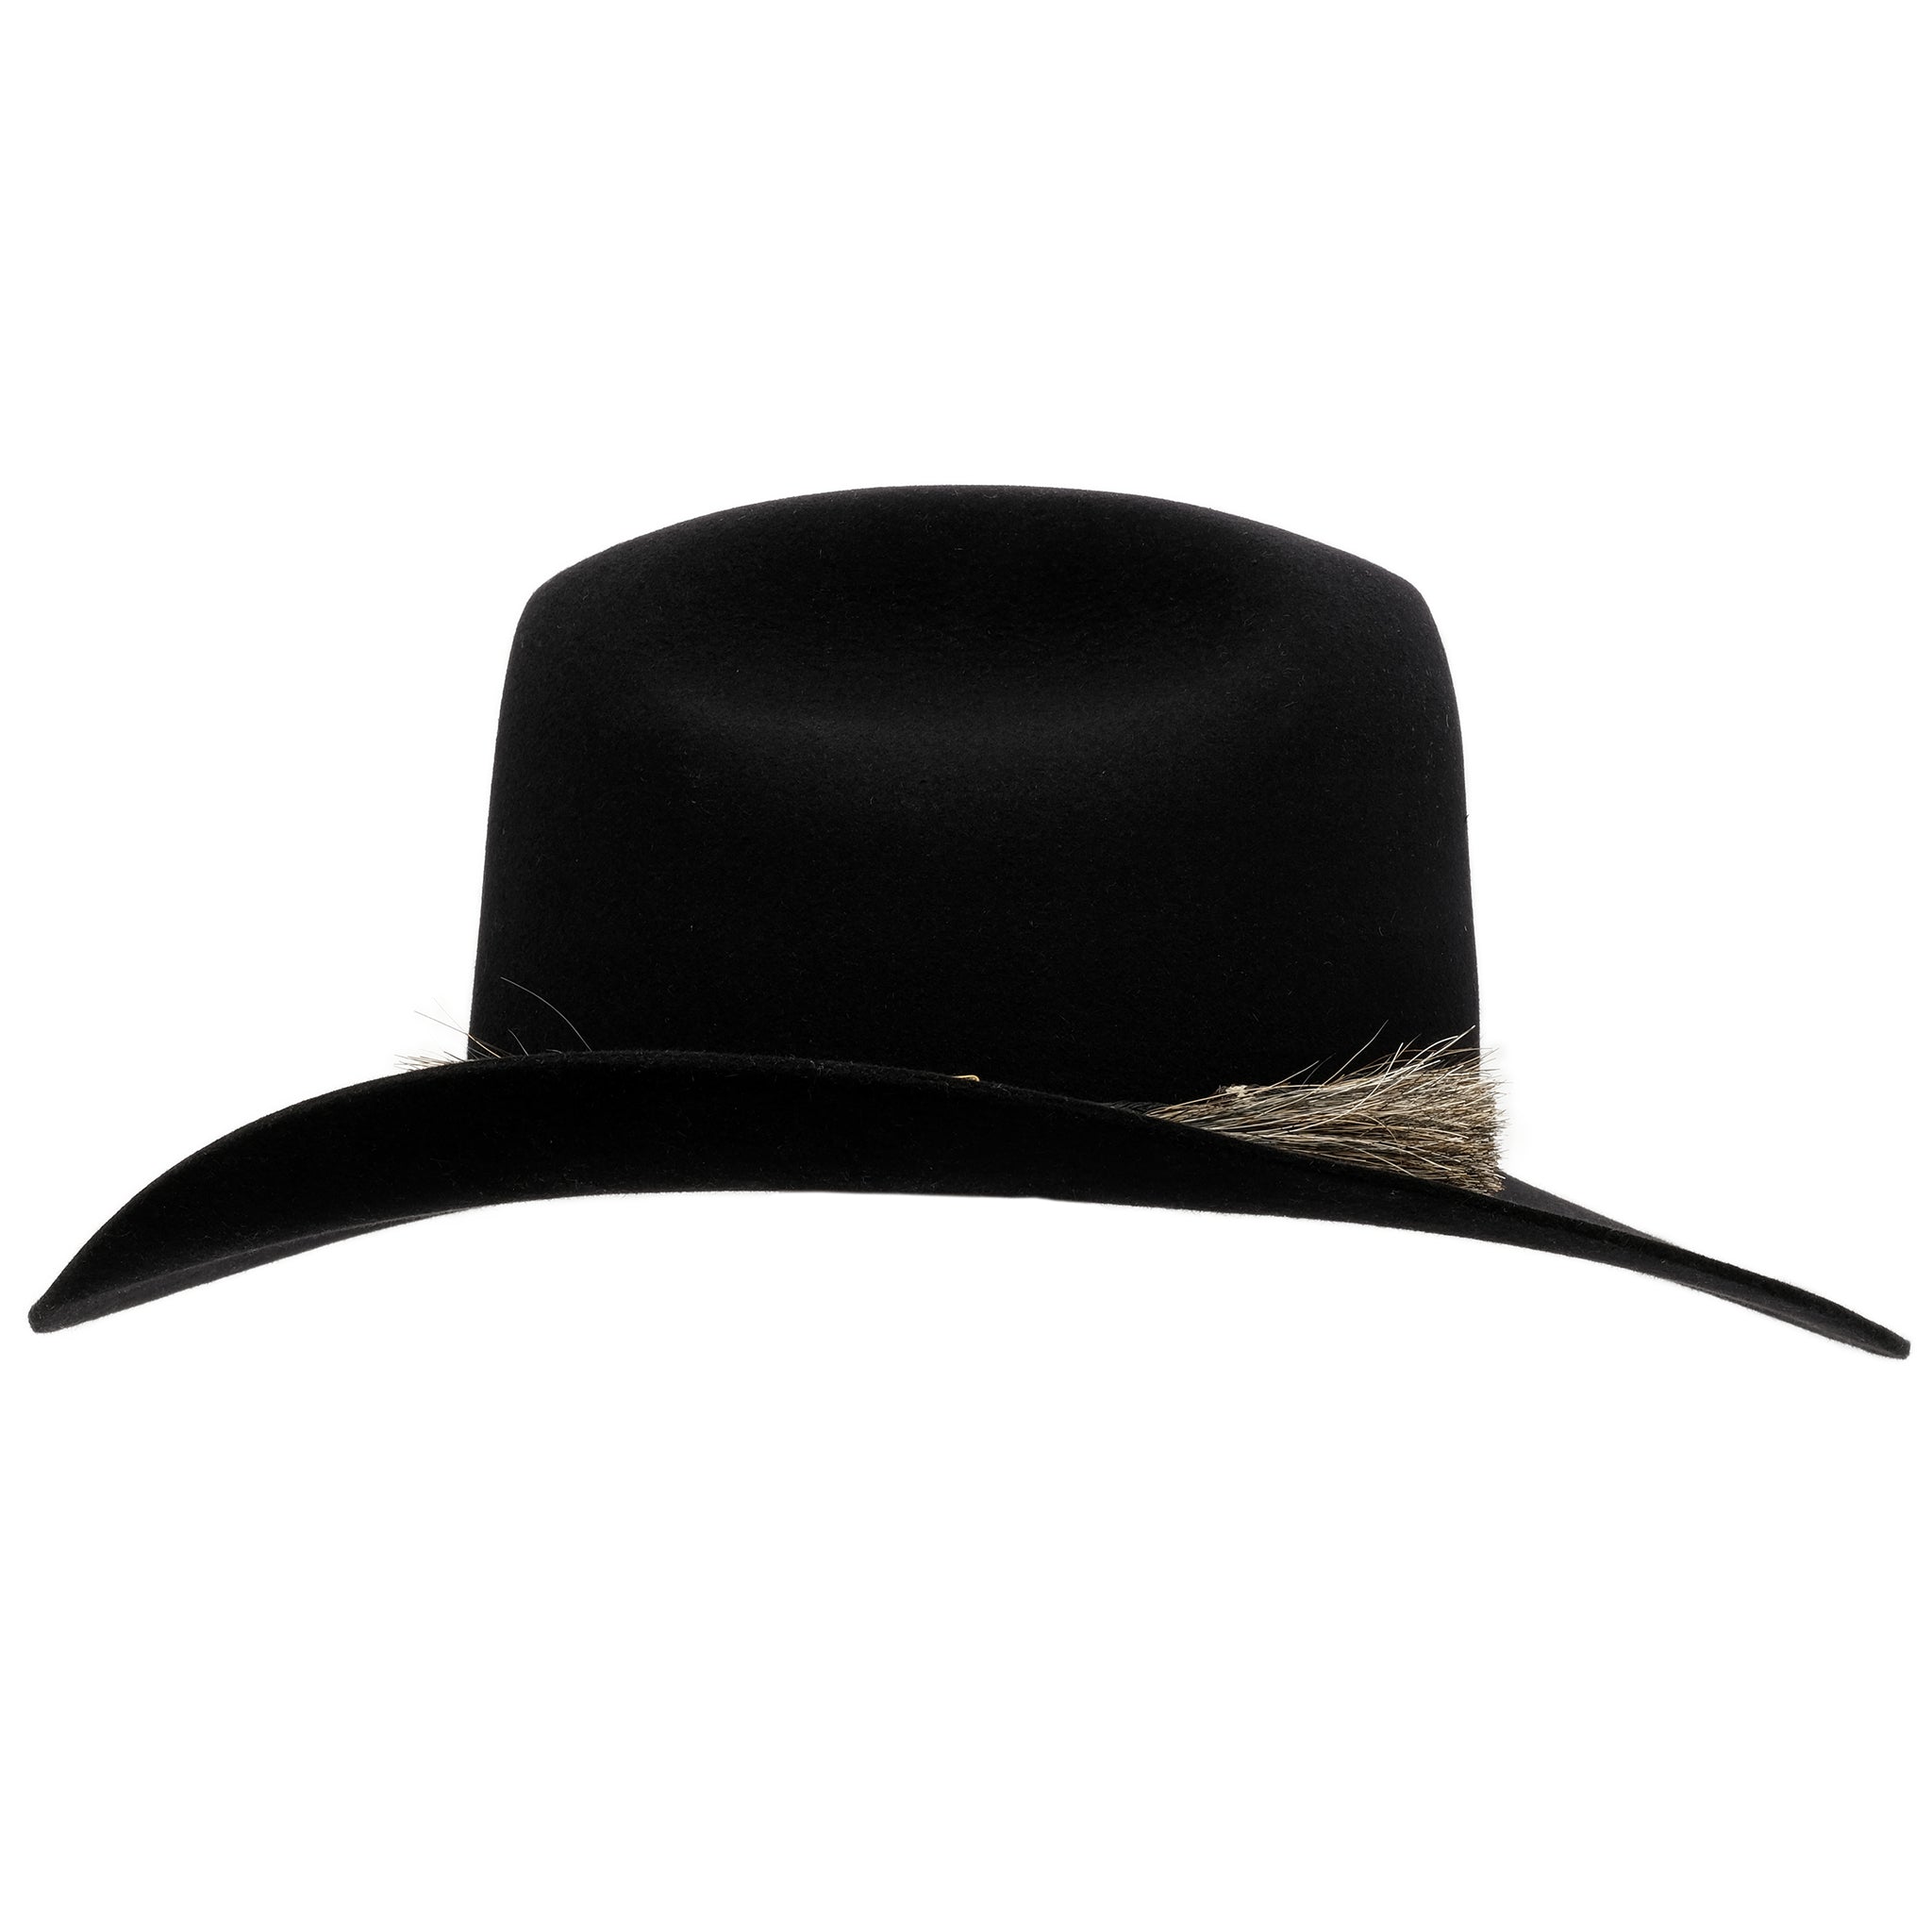 Side view of black Akubra Rough rider hat